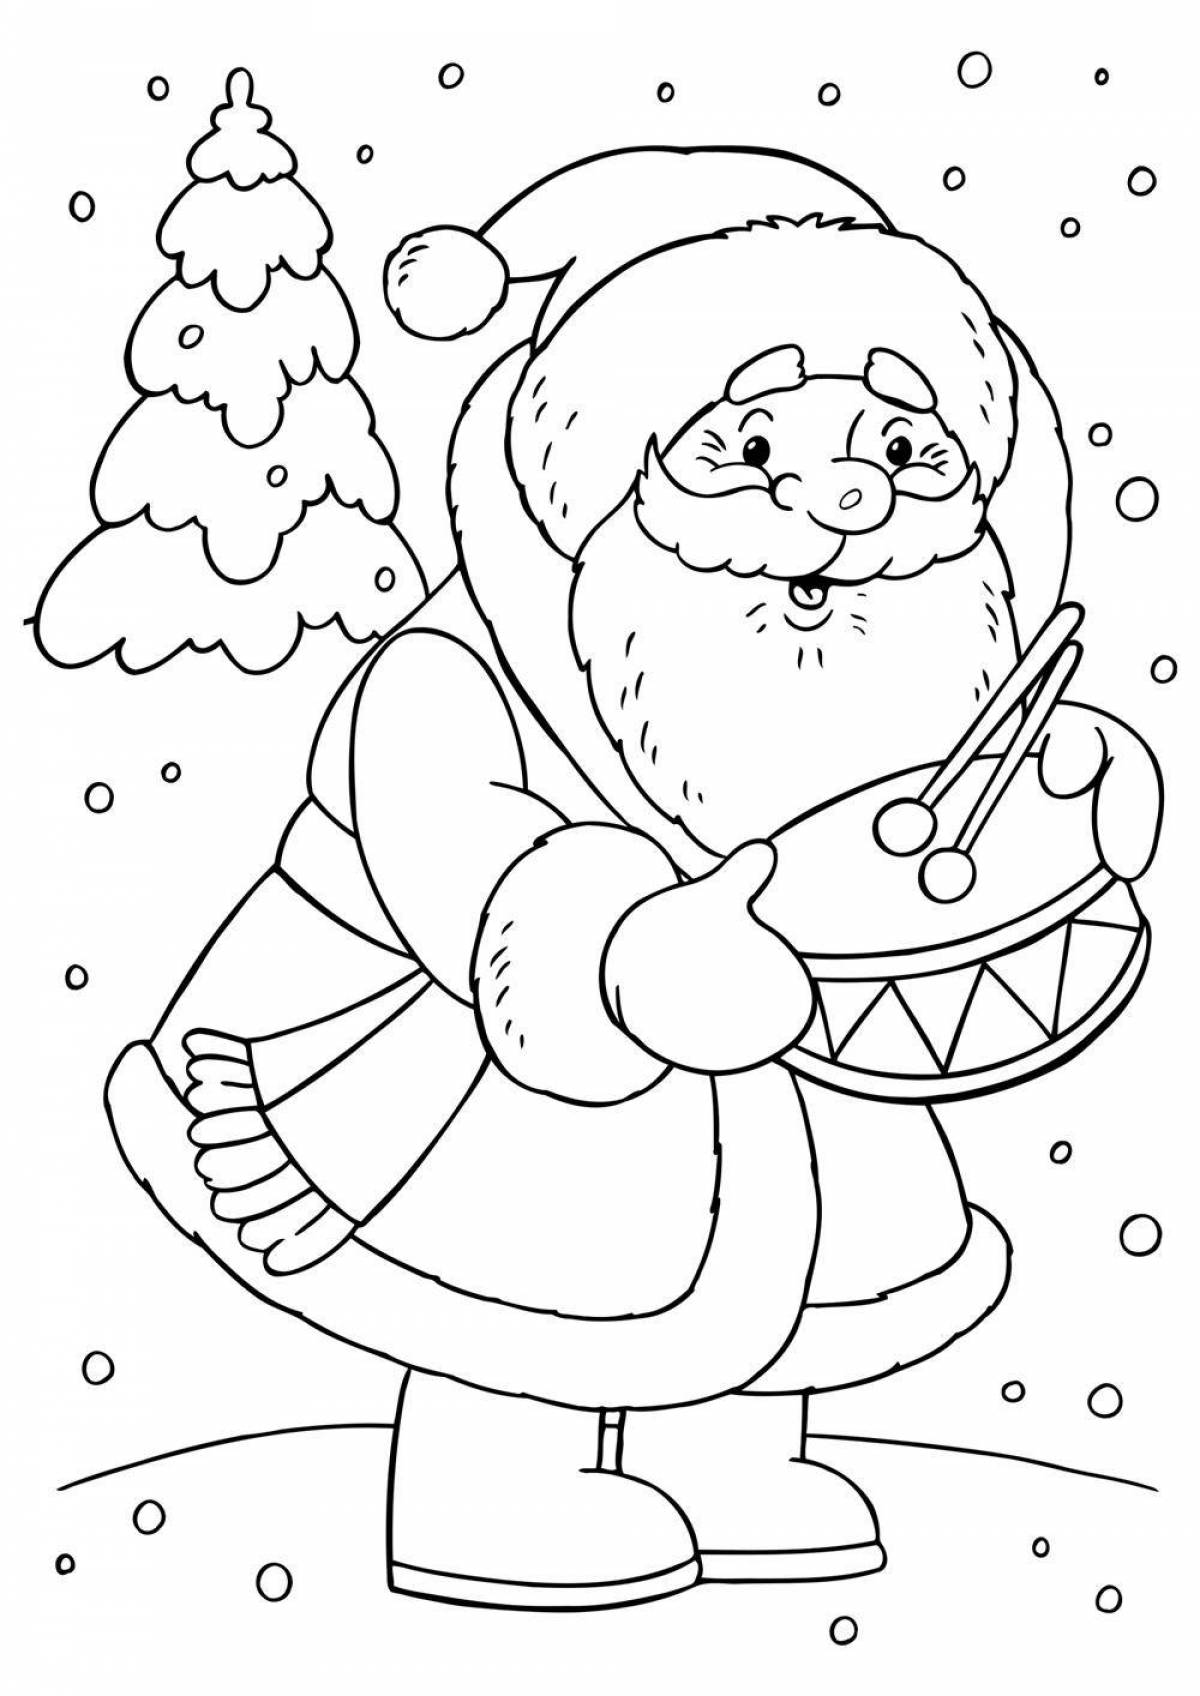 Christmas color drawing for kids